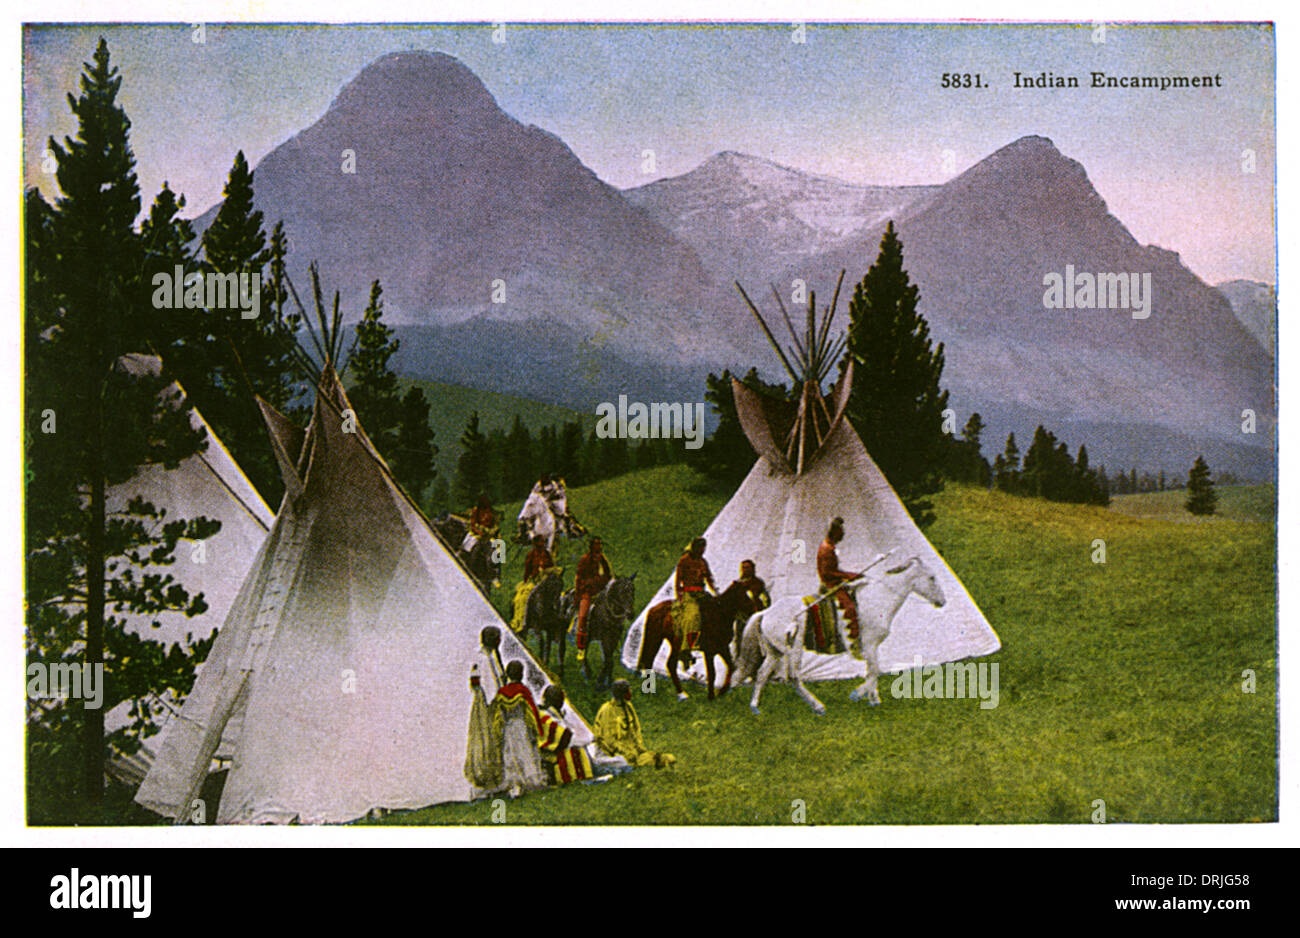 Native American Indian Encampment Banque D'Images